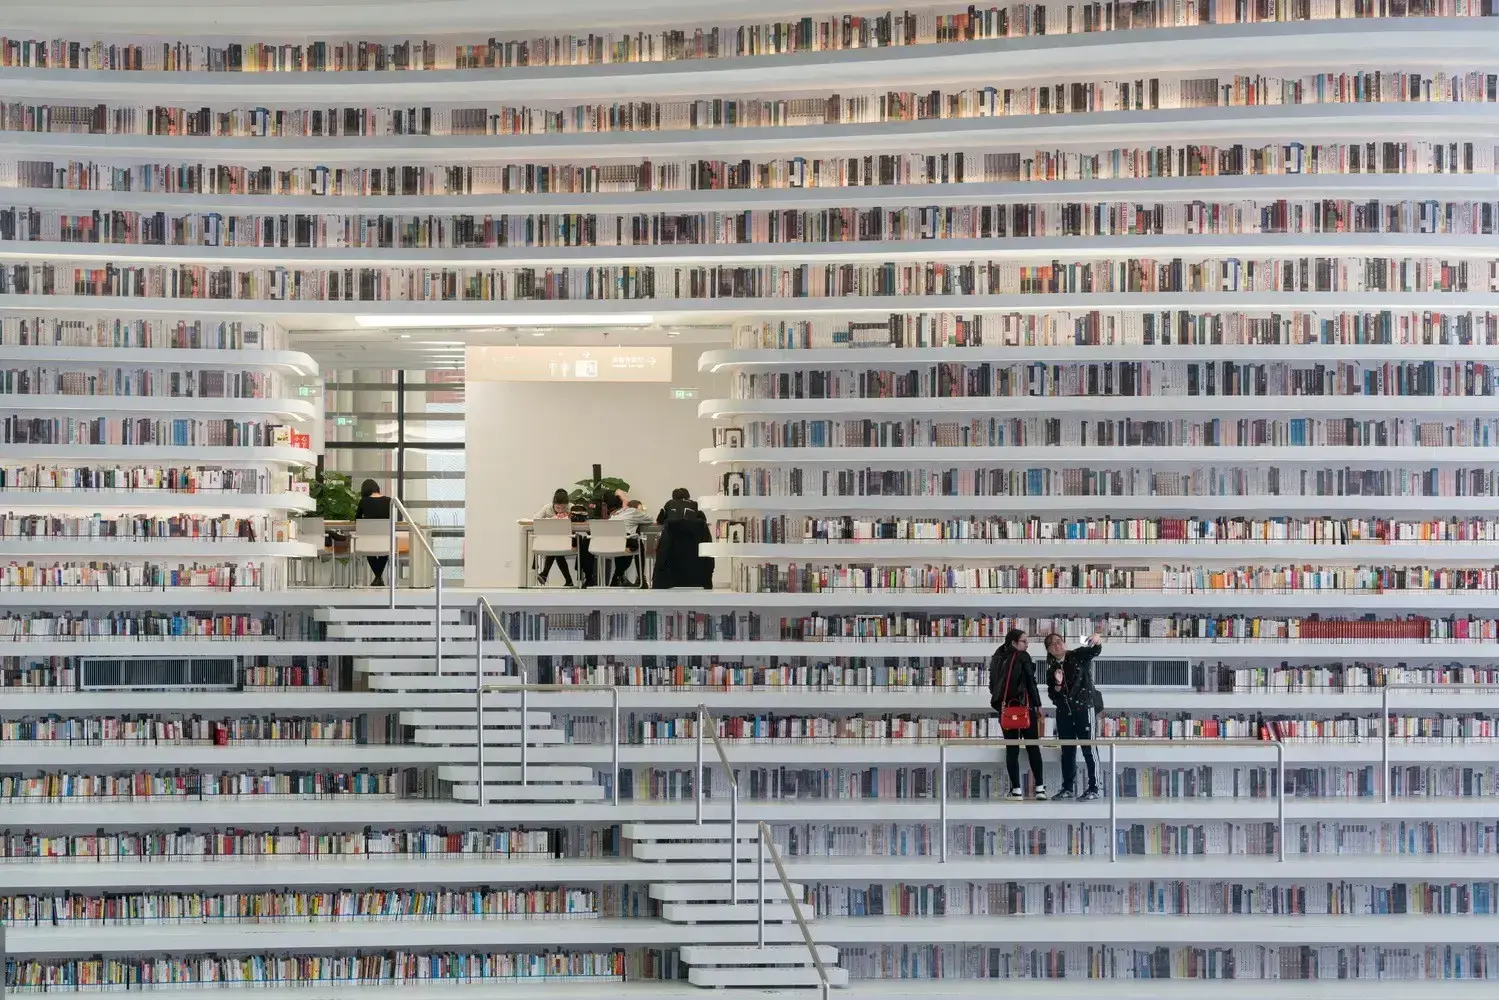 Proyecto de biblioteca: biblioteca en Tianjin - China (diseño de libro)